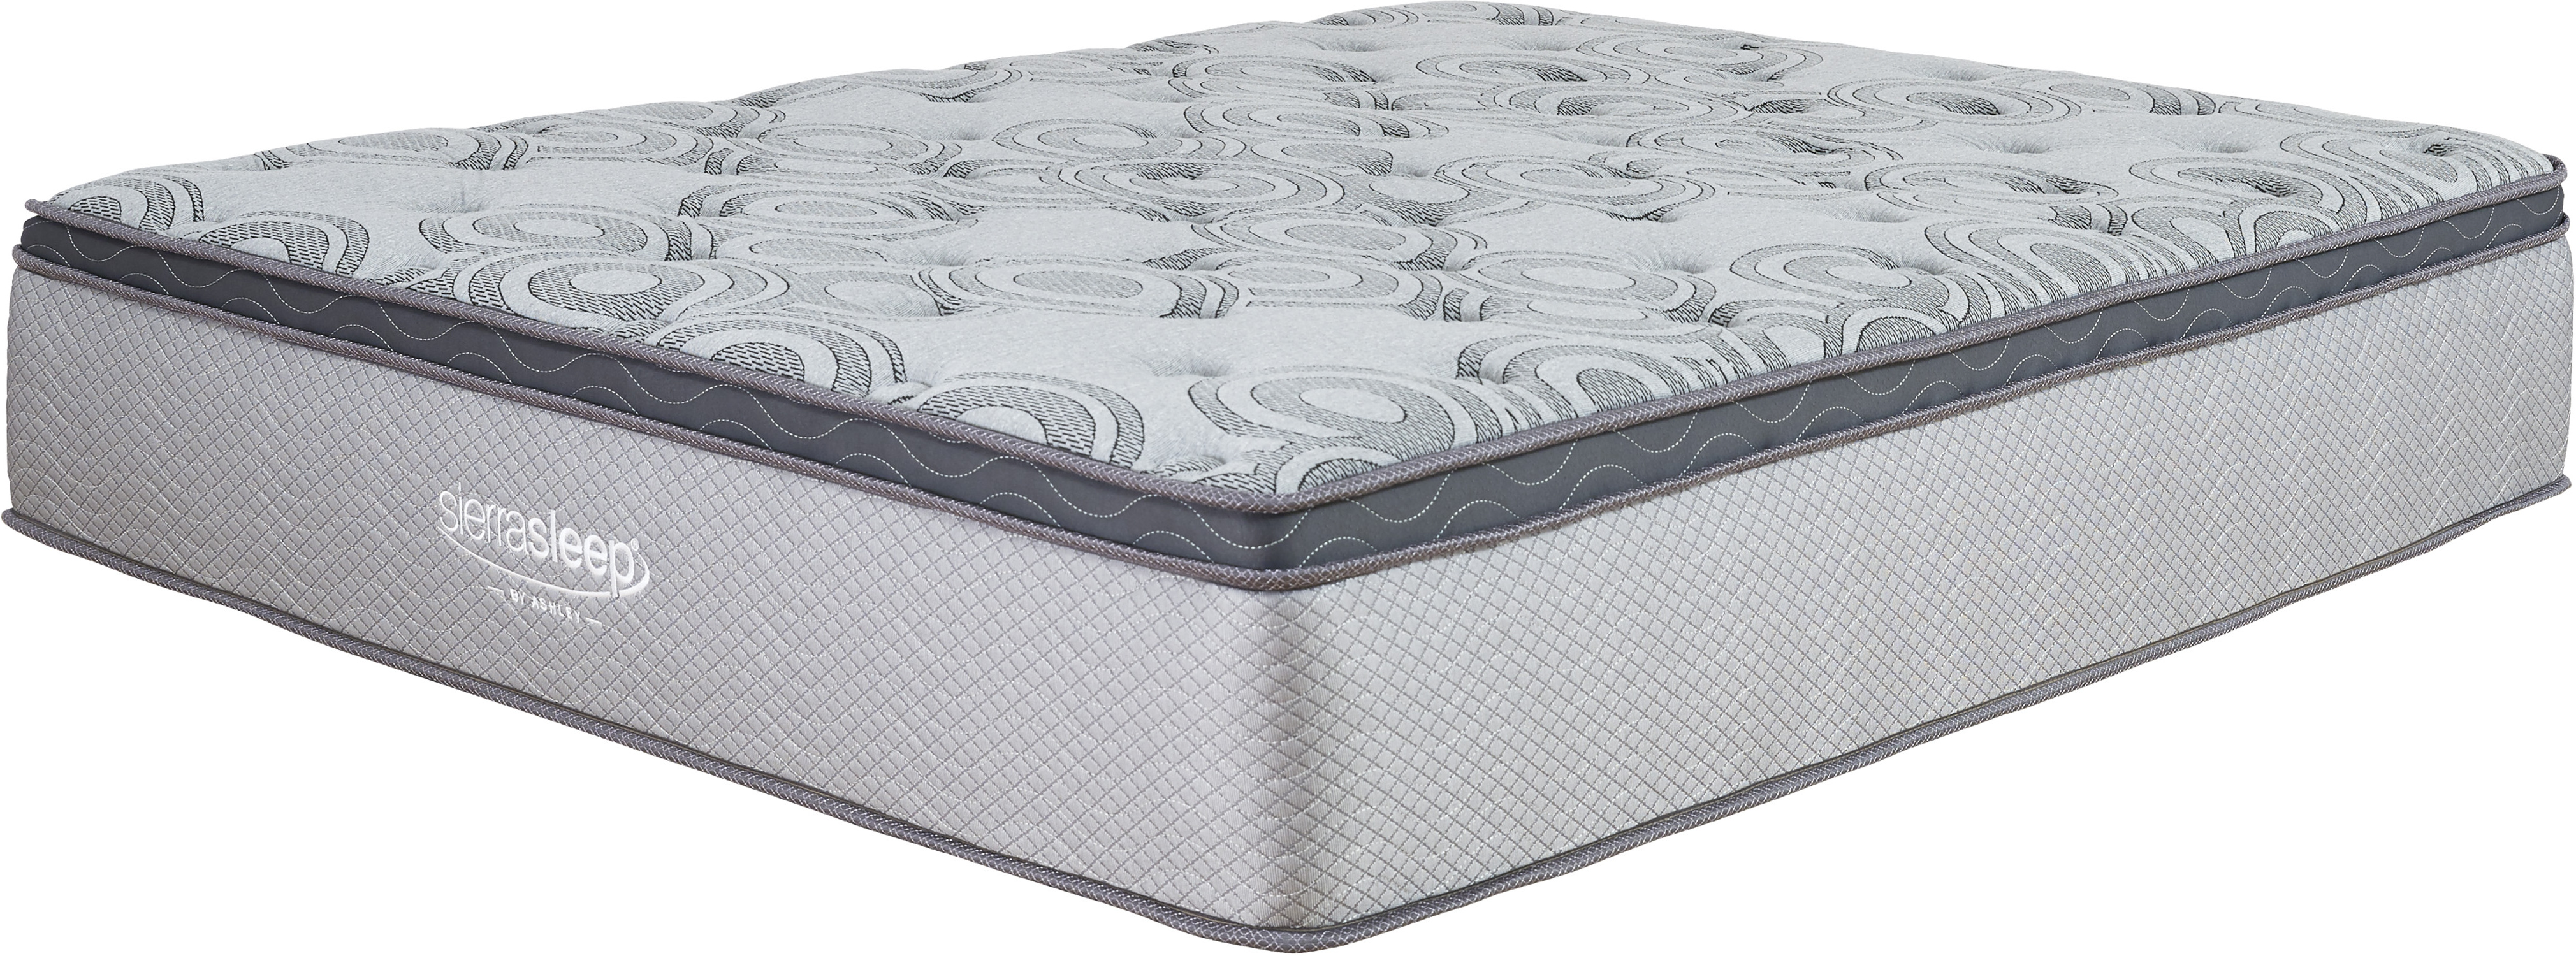 augusta 2 king euro top mattress